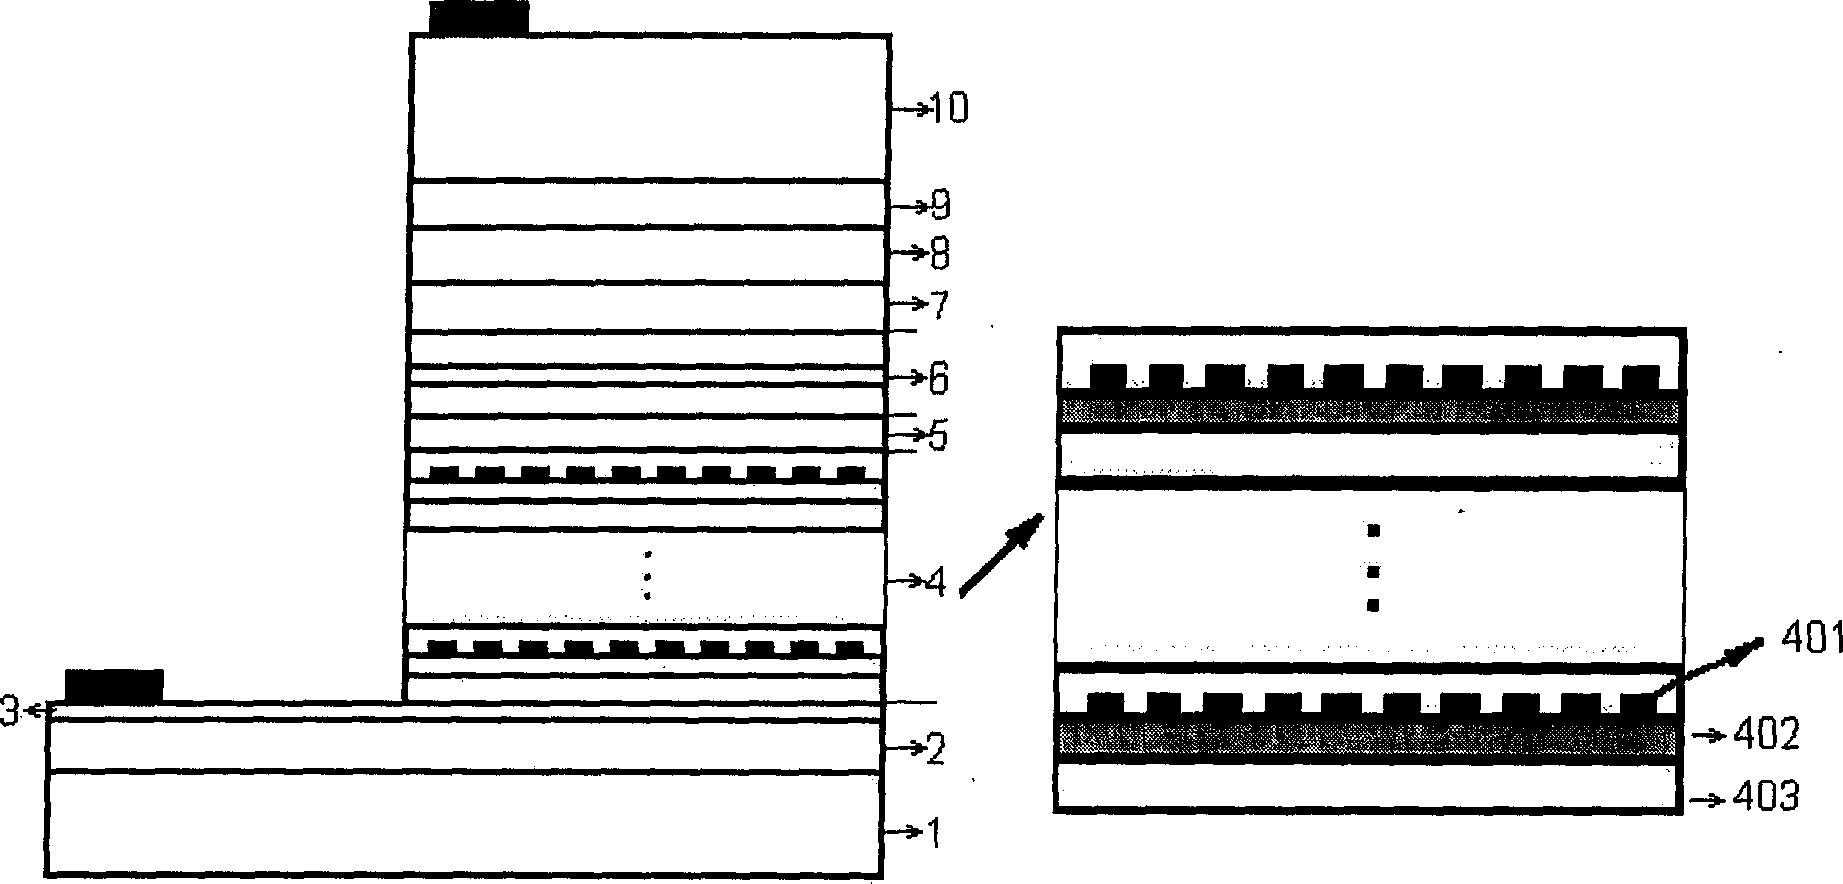 Detector converted on infrared wavelength, near-infrared wavelength